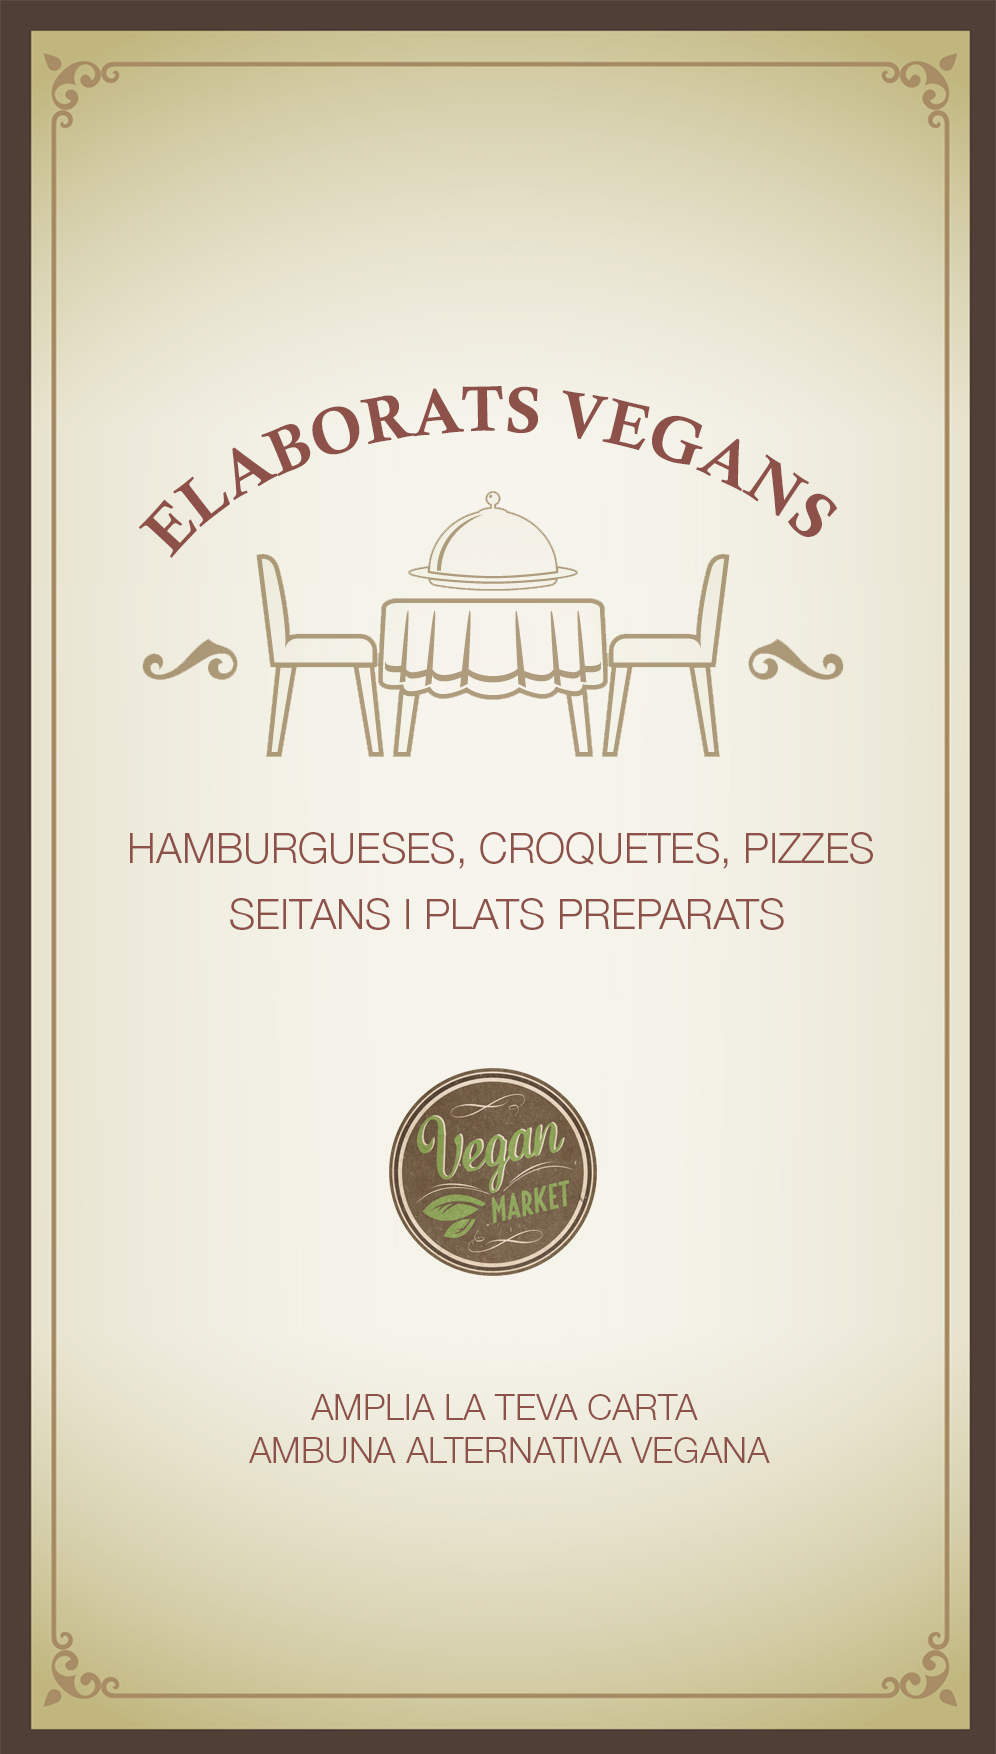 Catálogo de precocinados veganos para octubre 2015